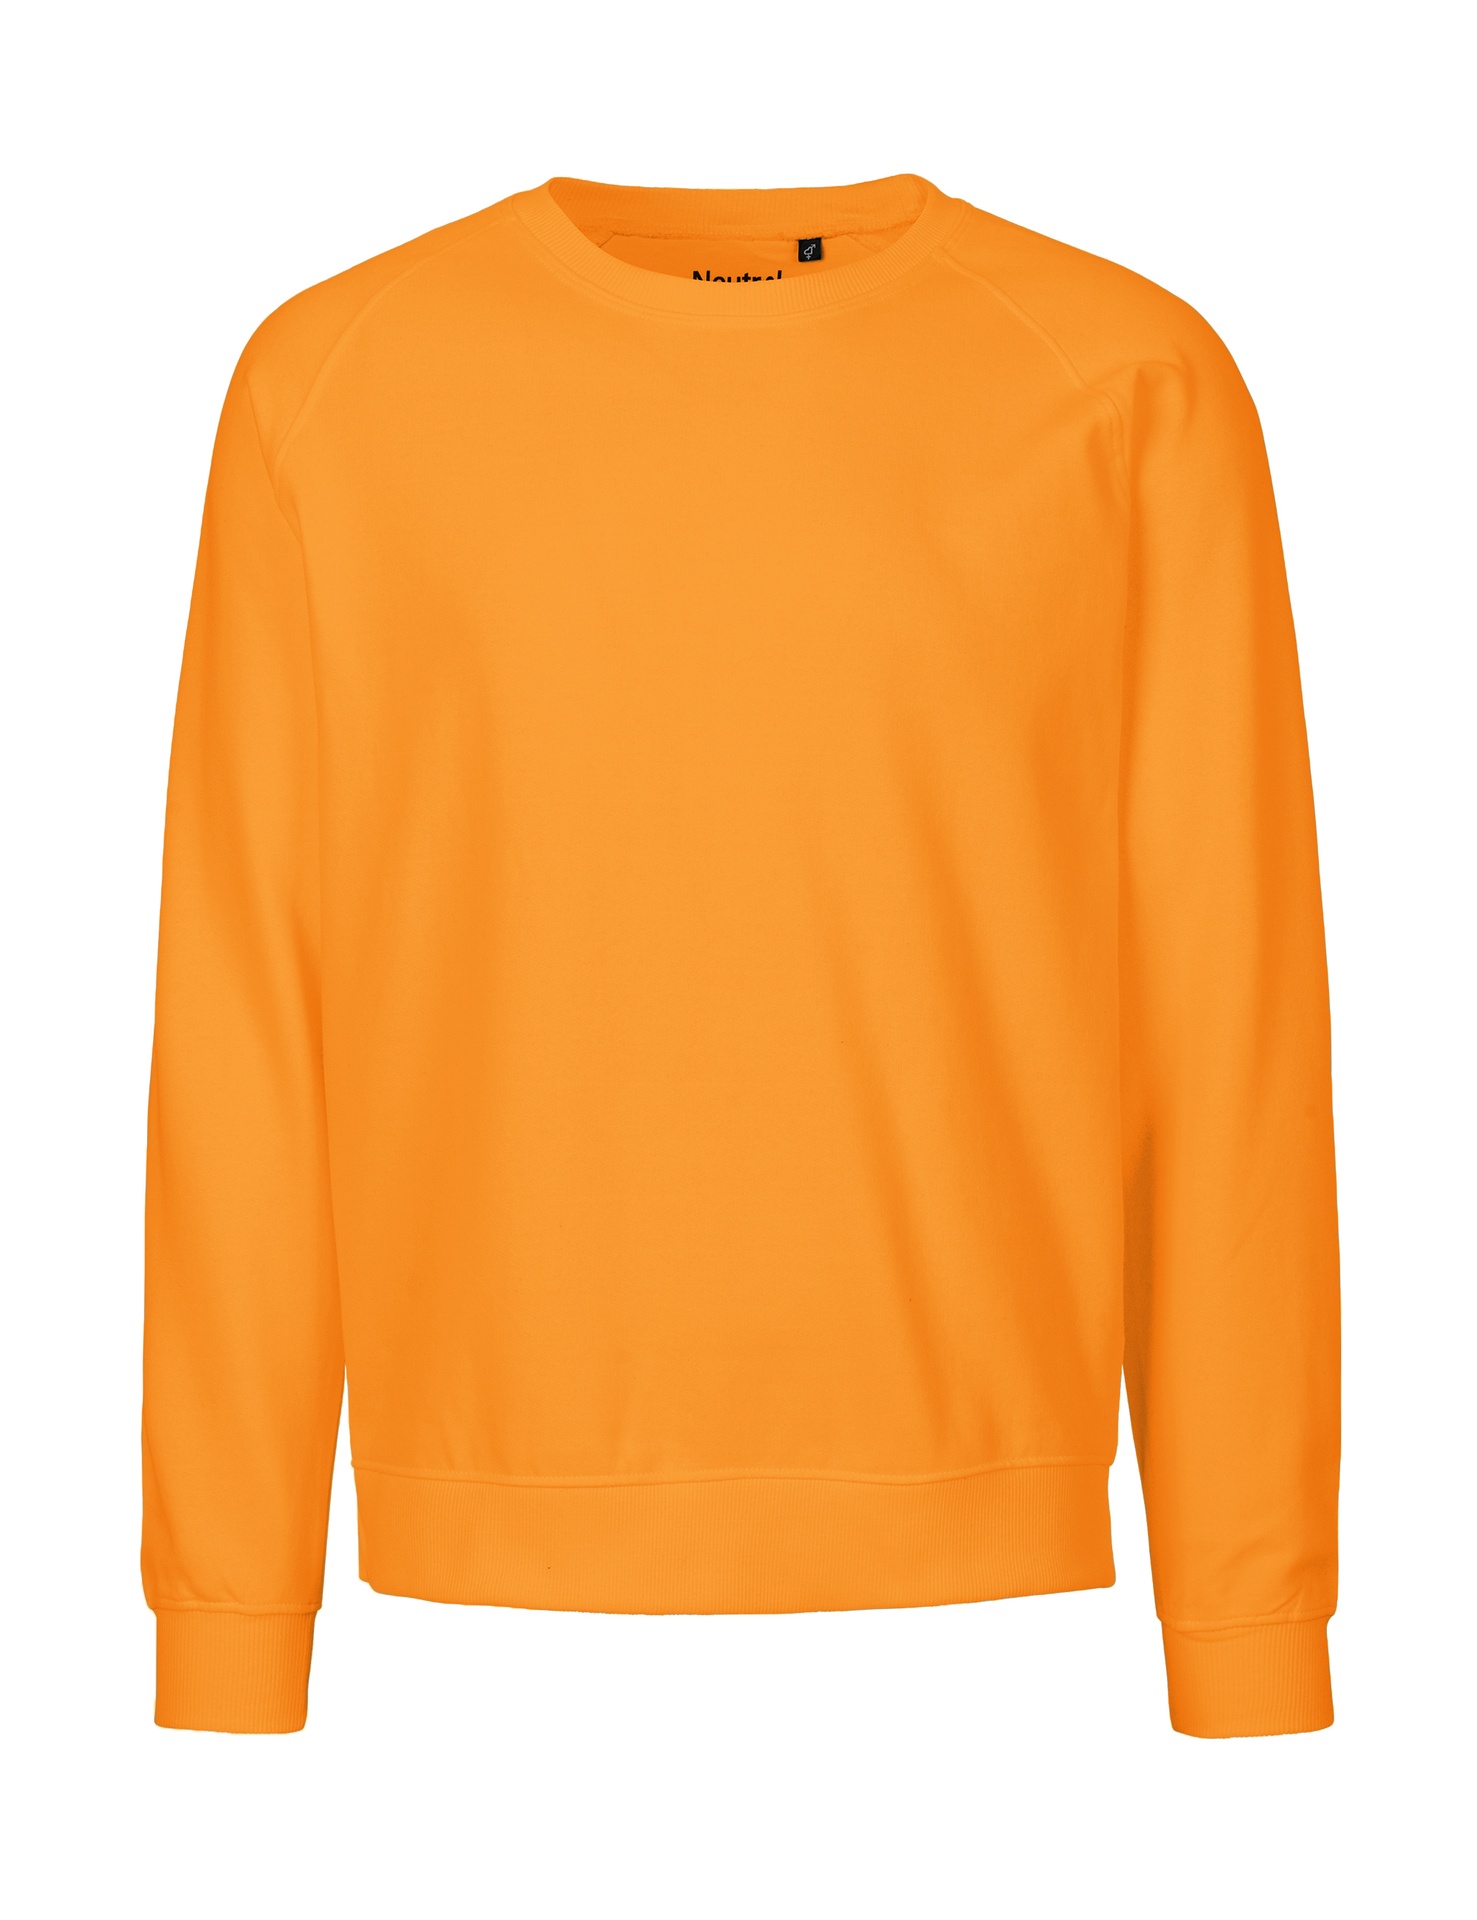 [PR/02787] Unisex Sweatshirt (Okay Orange 31, XS)